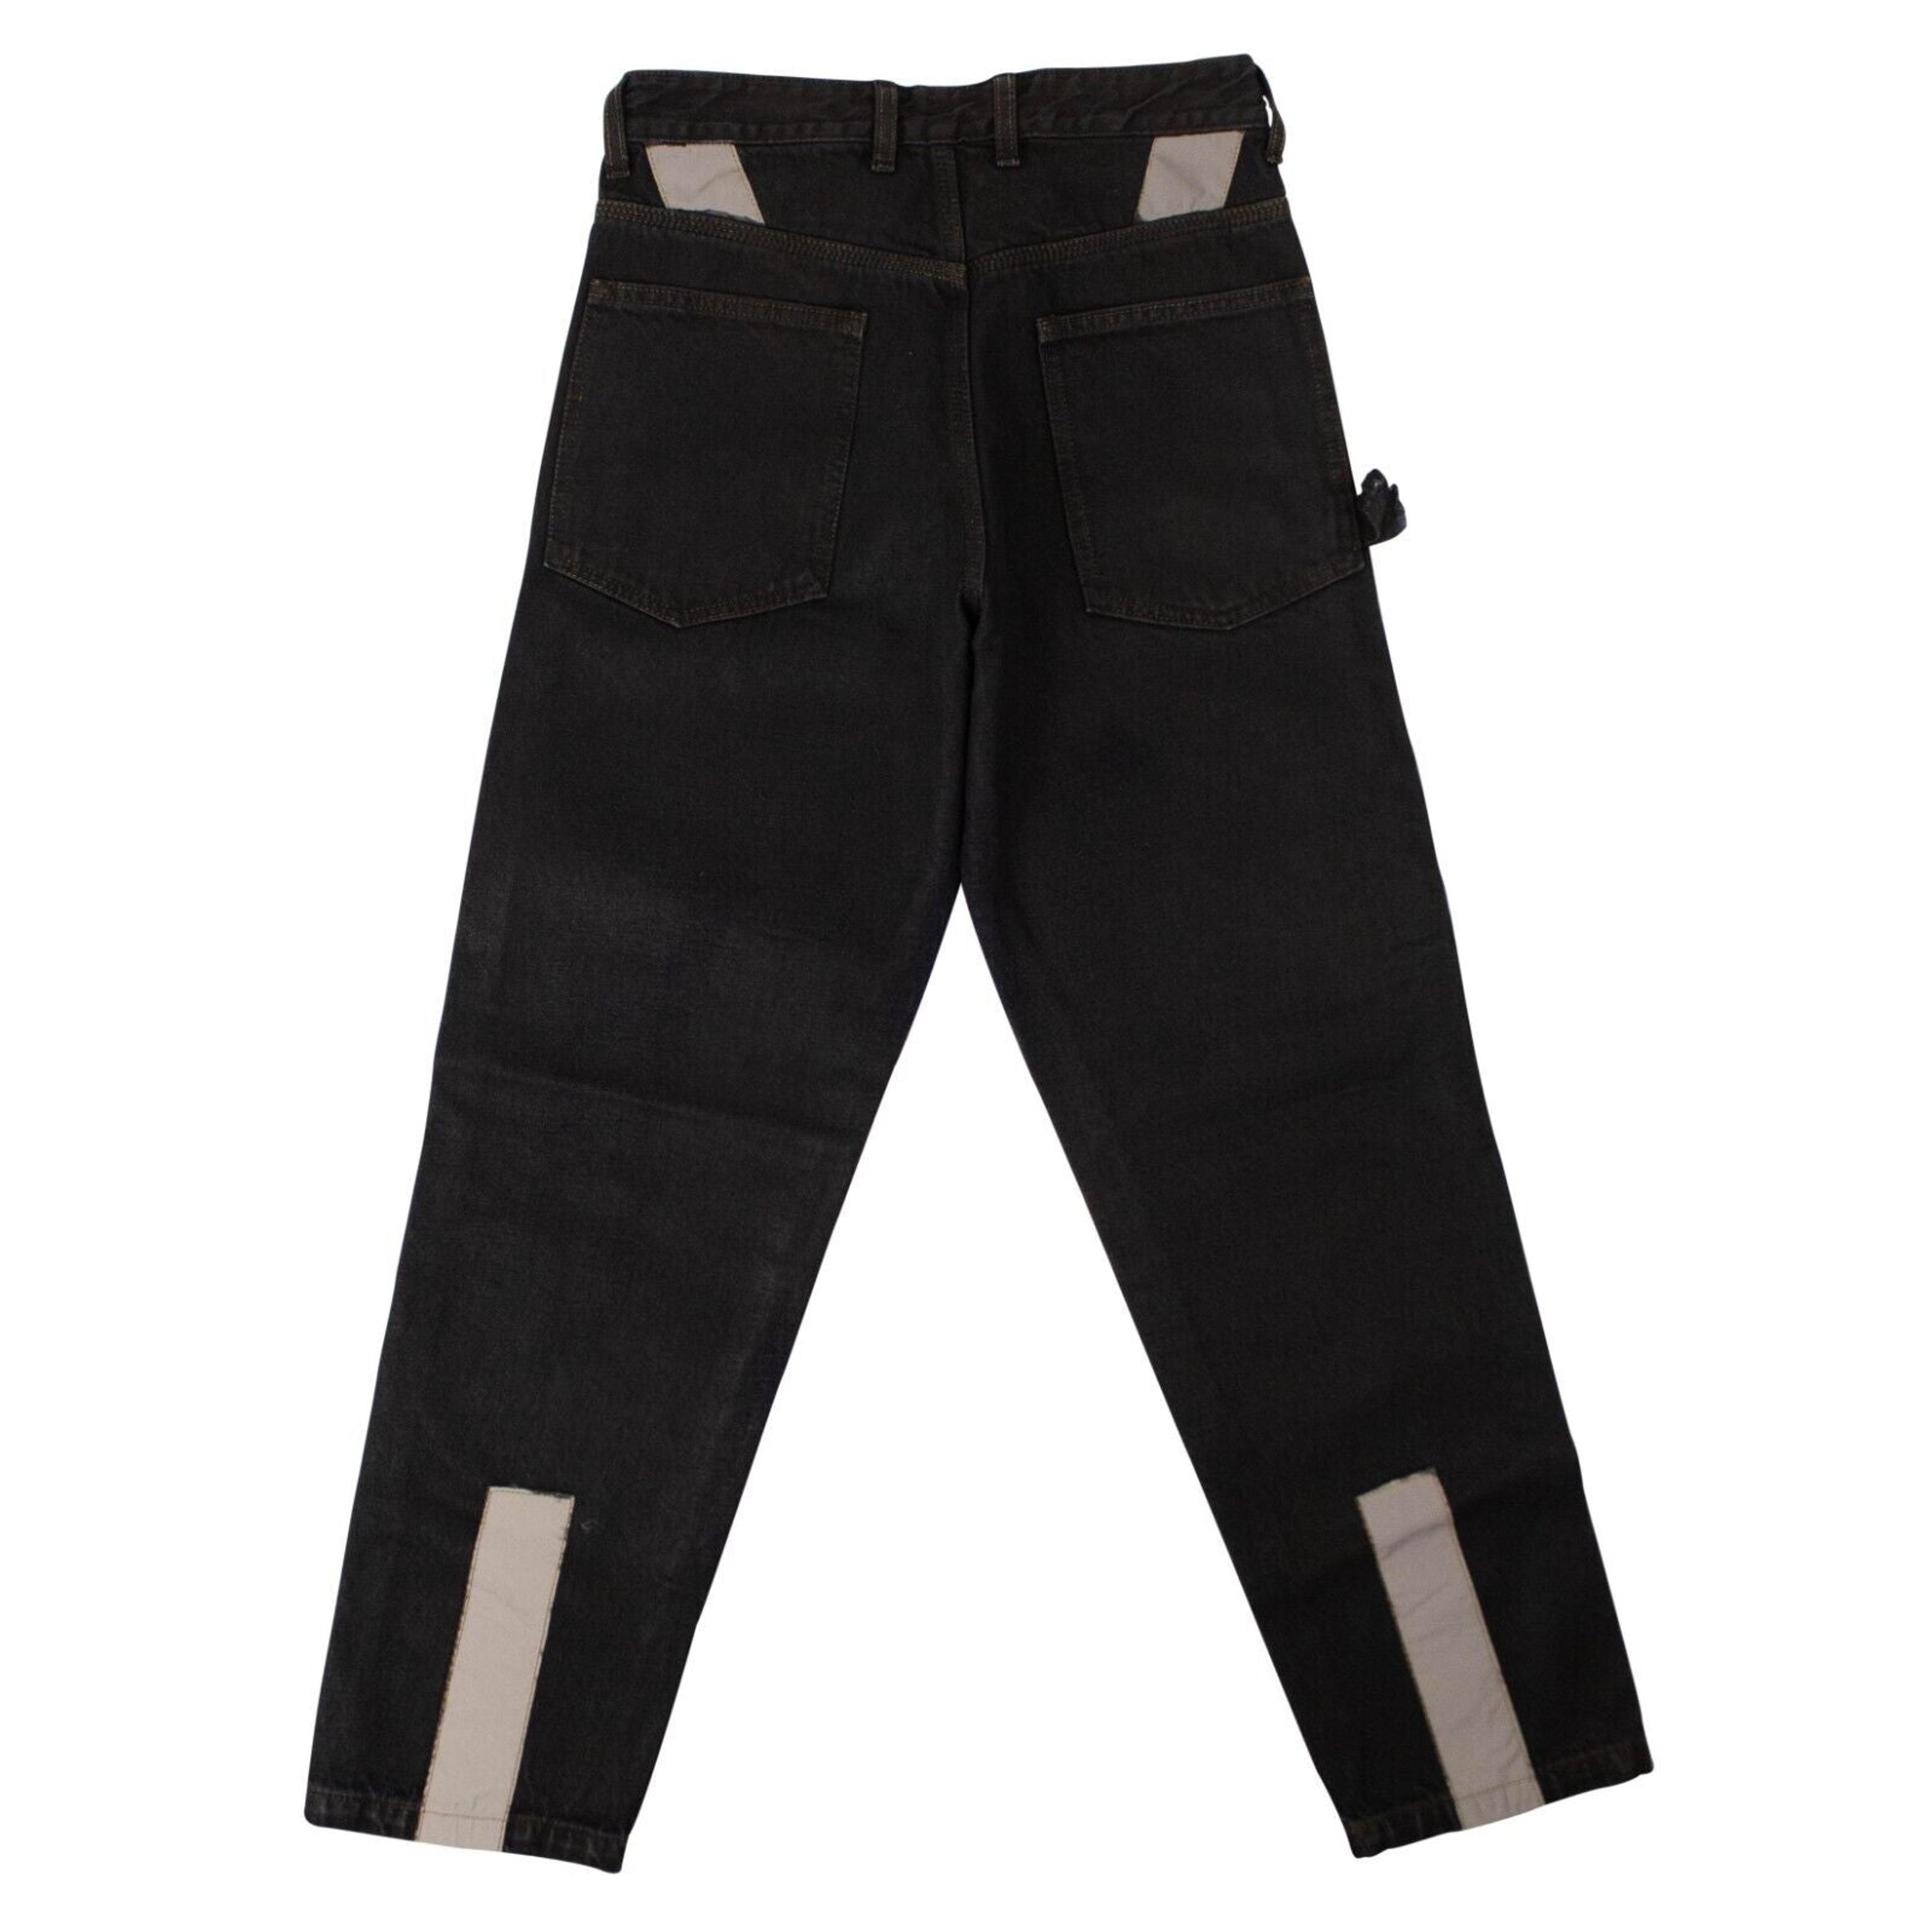 Alternate View 2 of U.P.W.W. Worker Denim Jeans - Black